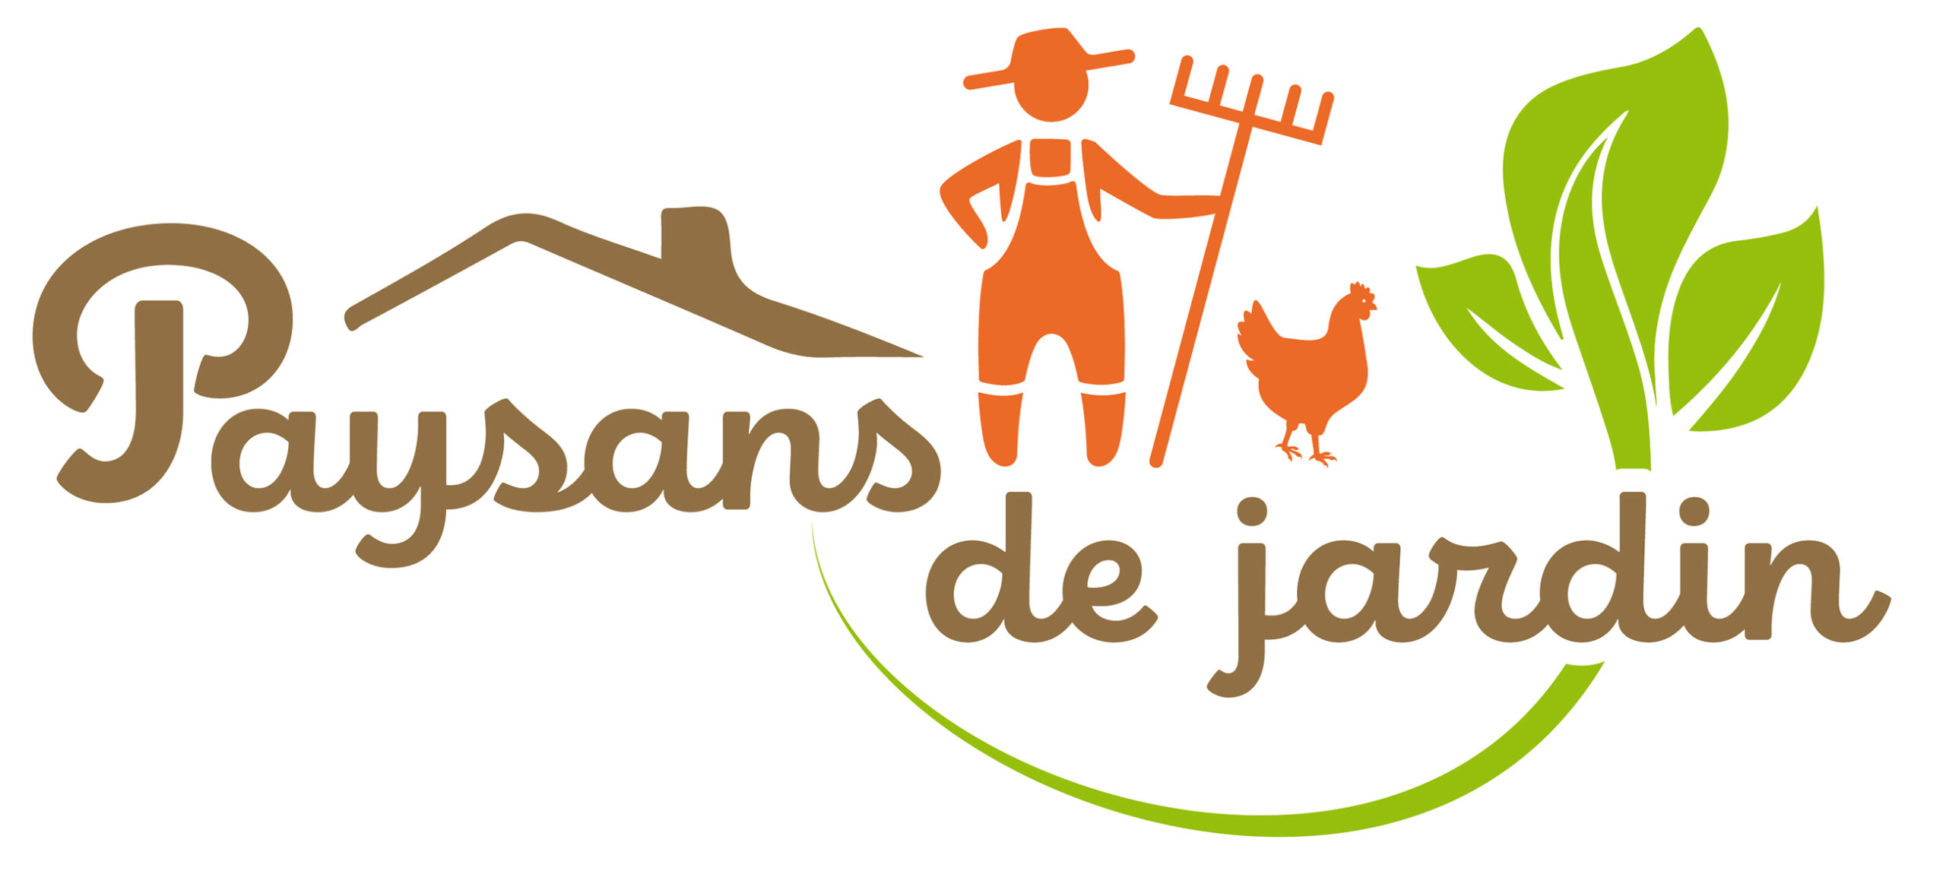 Logo de Paysans de jardin